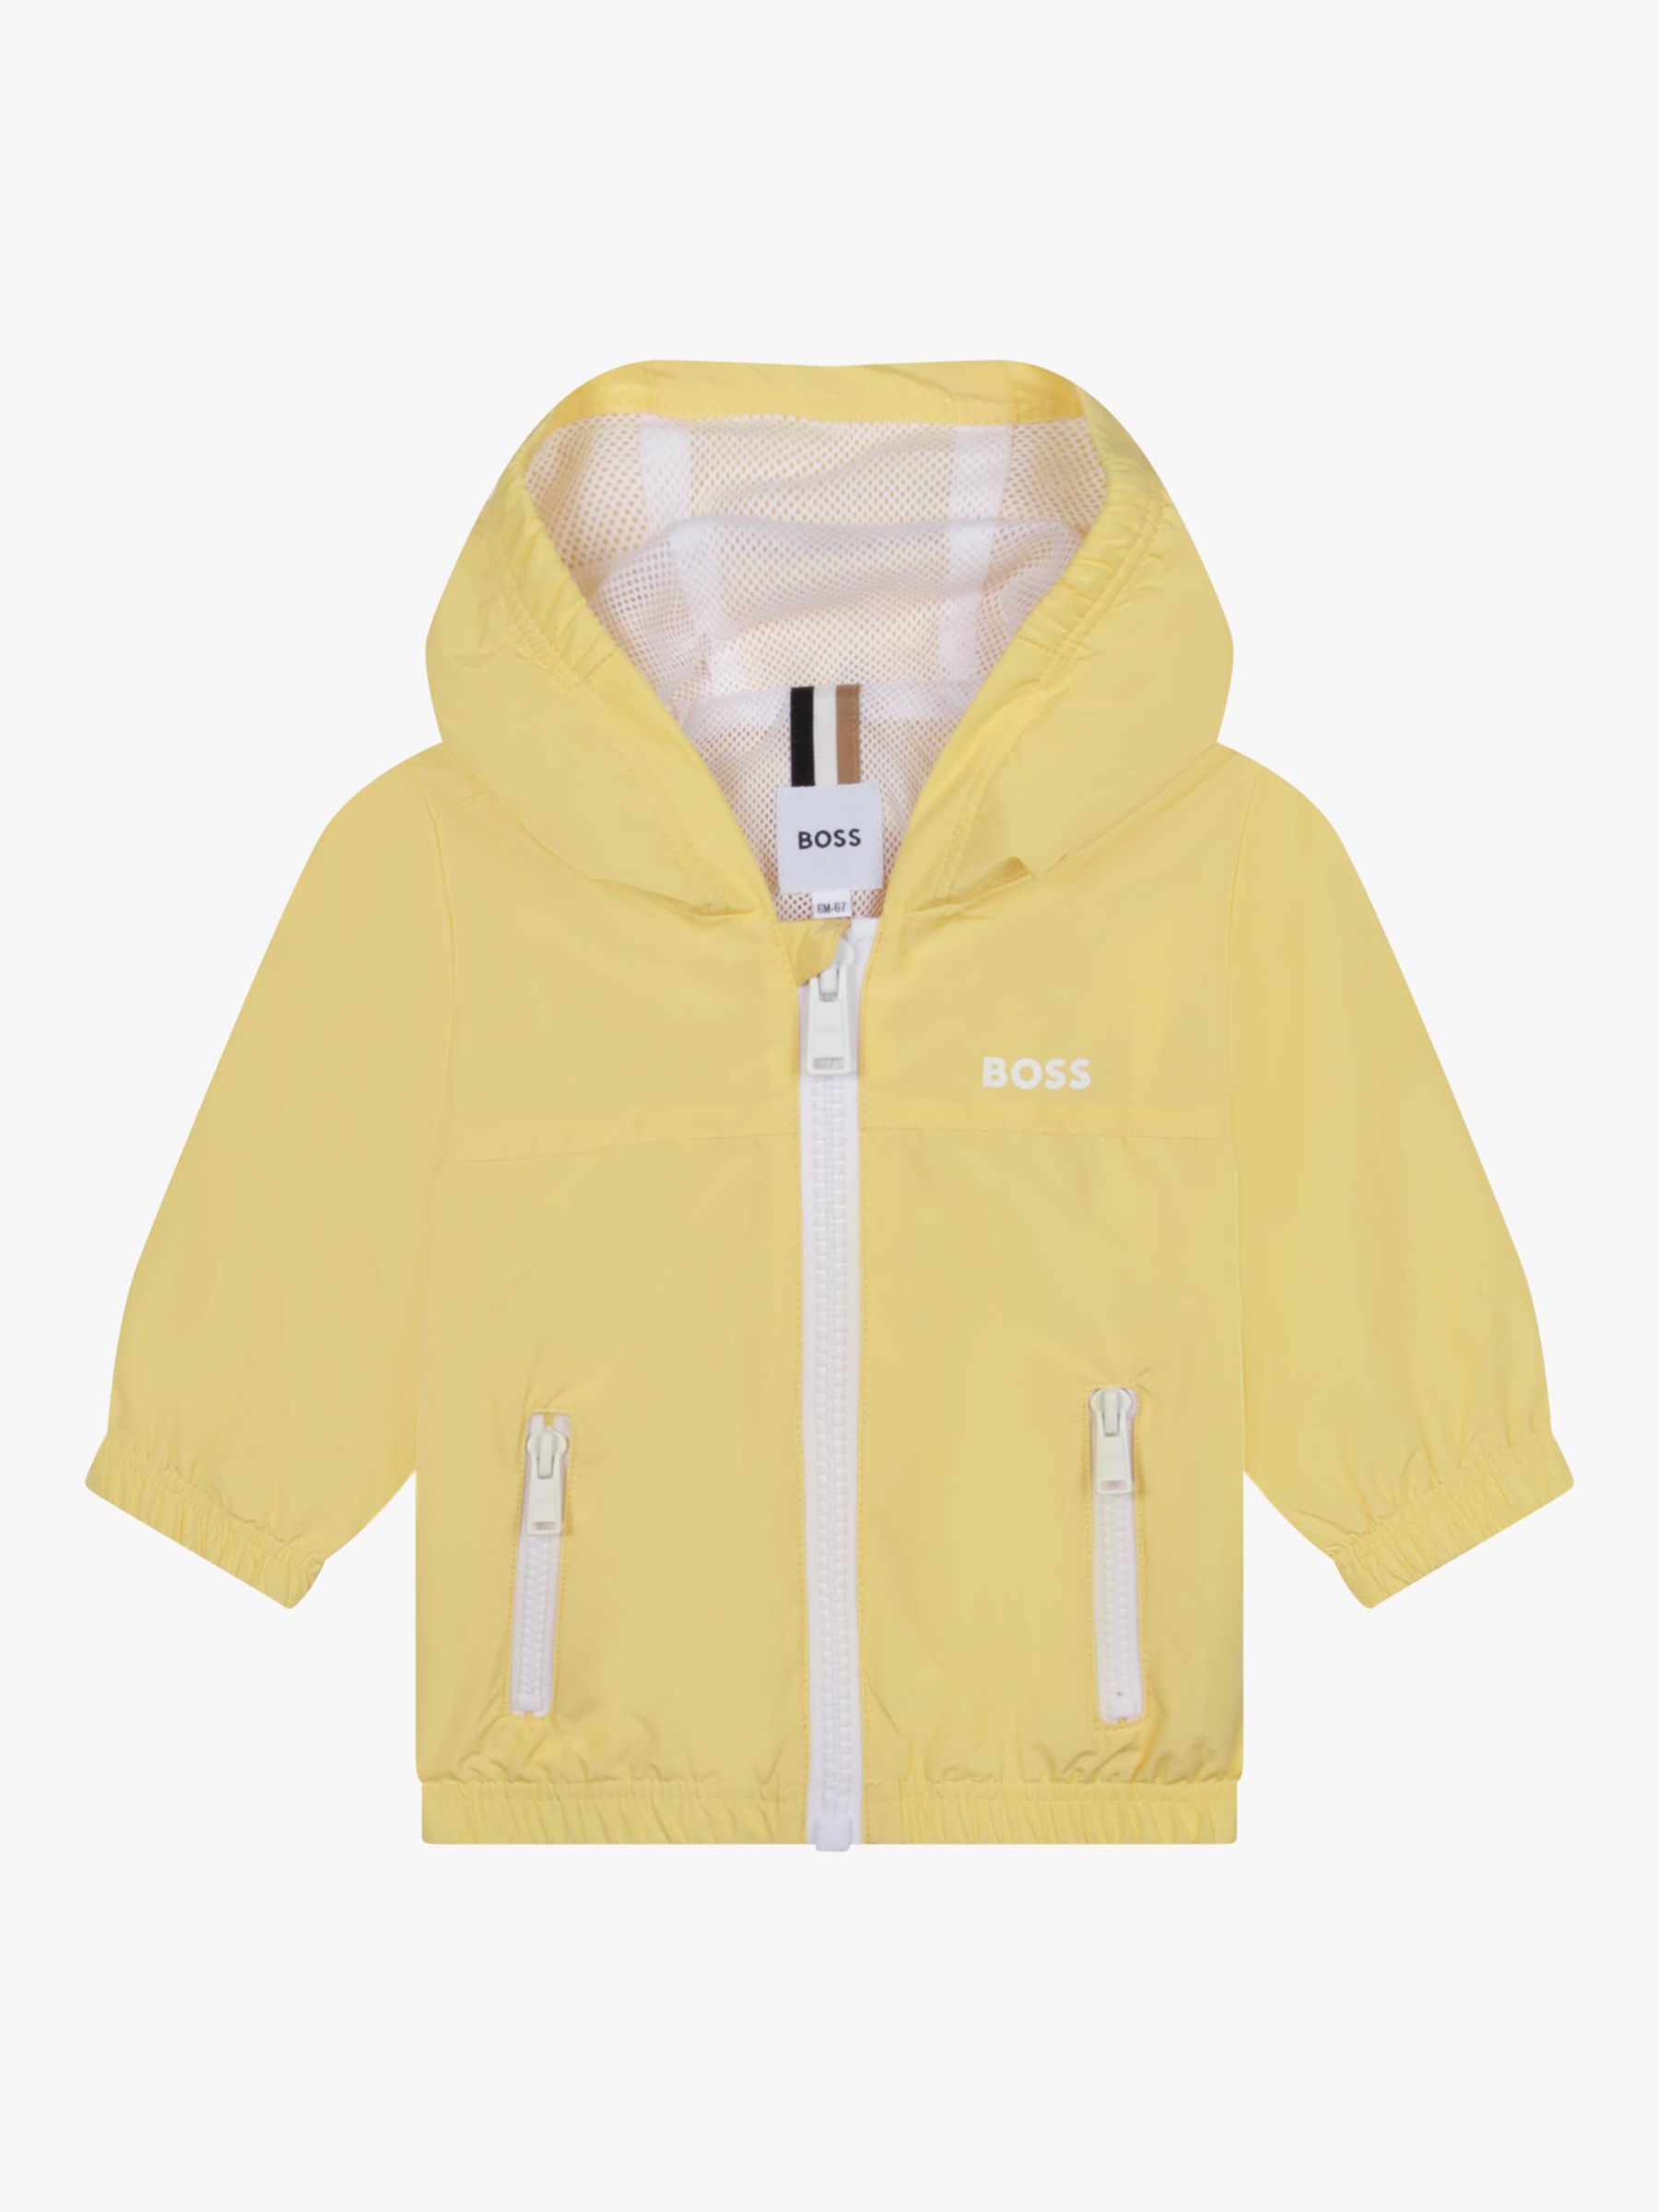 HUGO BOSS Baby Windbreaker Jacket, Yellow at John Lewis & Partners